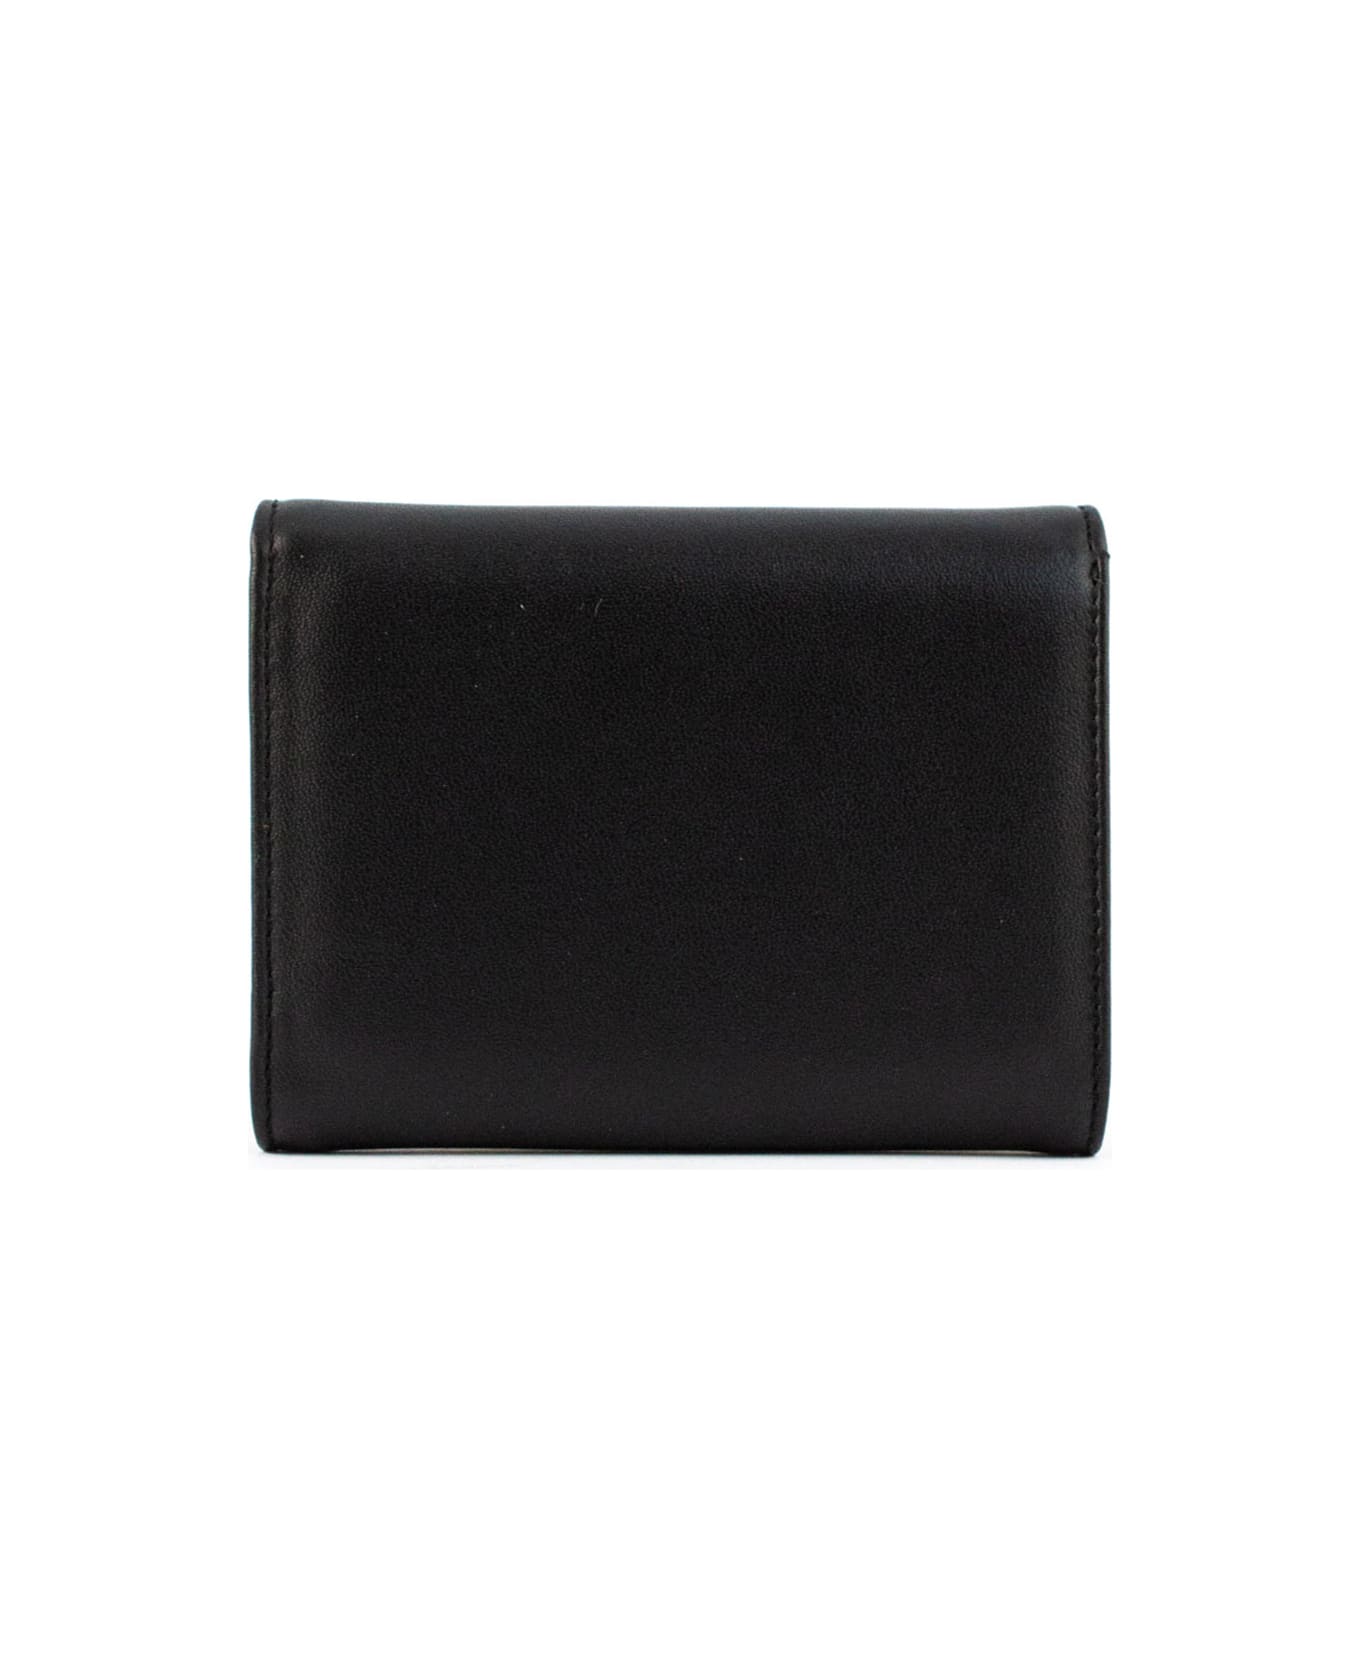 Avenue 67 Black Leather Wallet - Nero